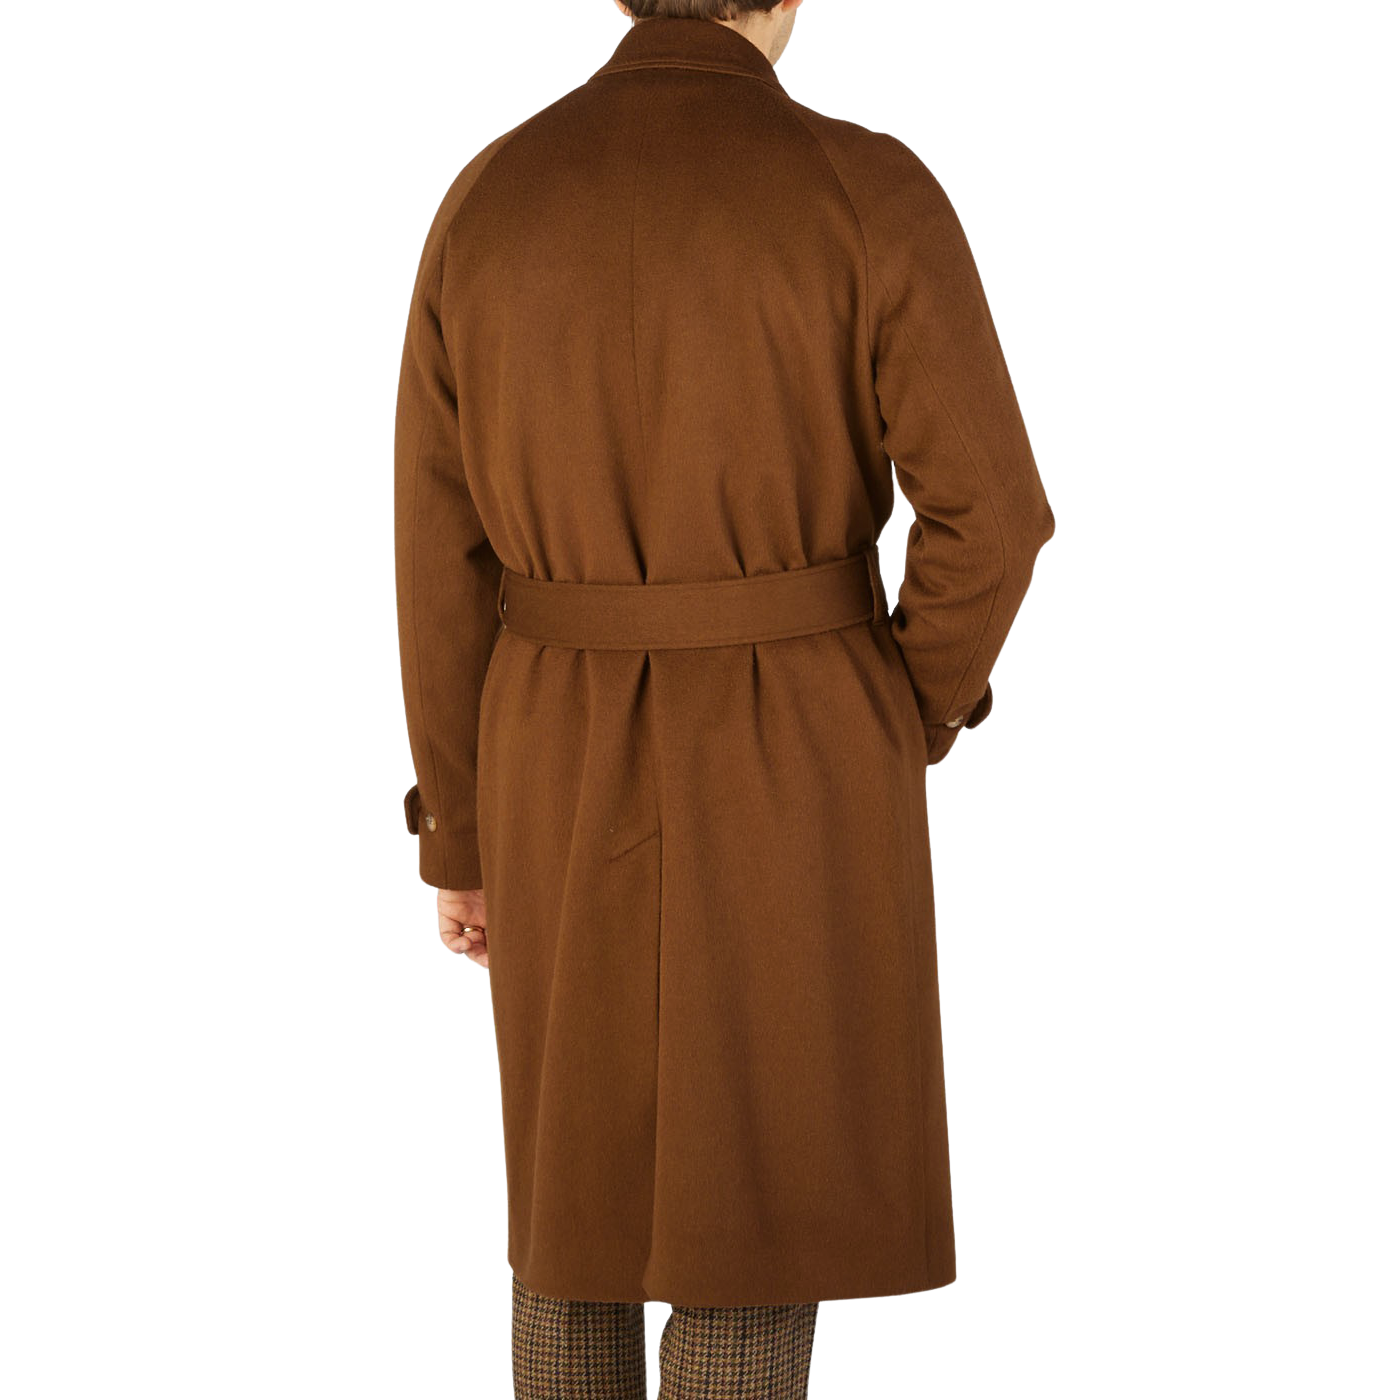 The back view of a man wearing Studio 73's Dark Brown Camel Wool Cashmere Raglan Coat.